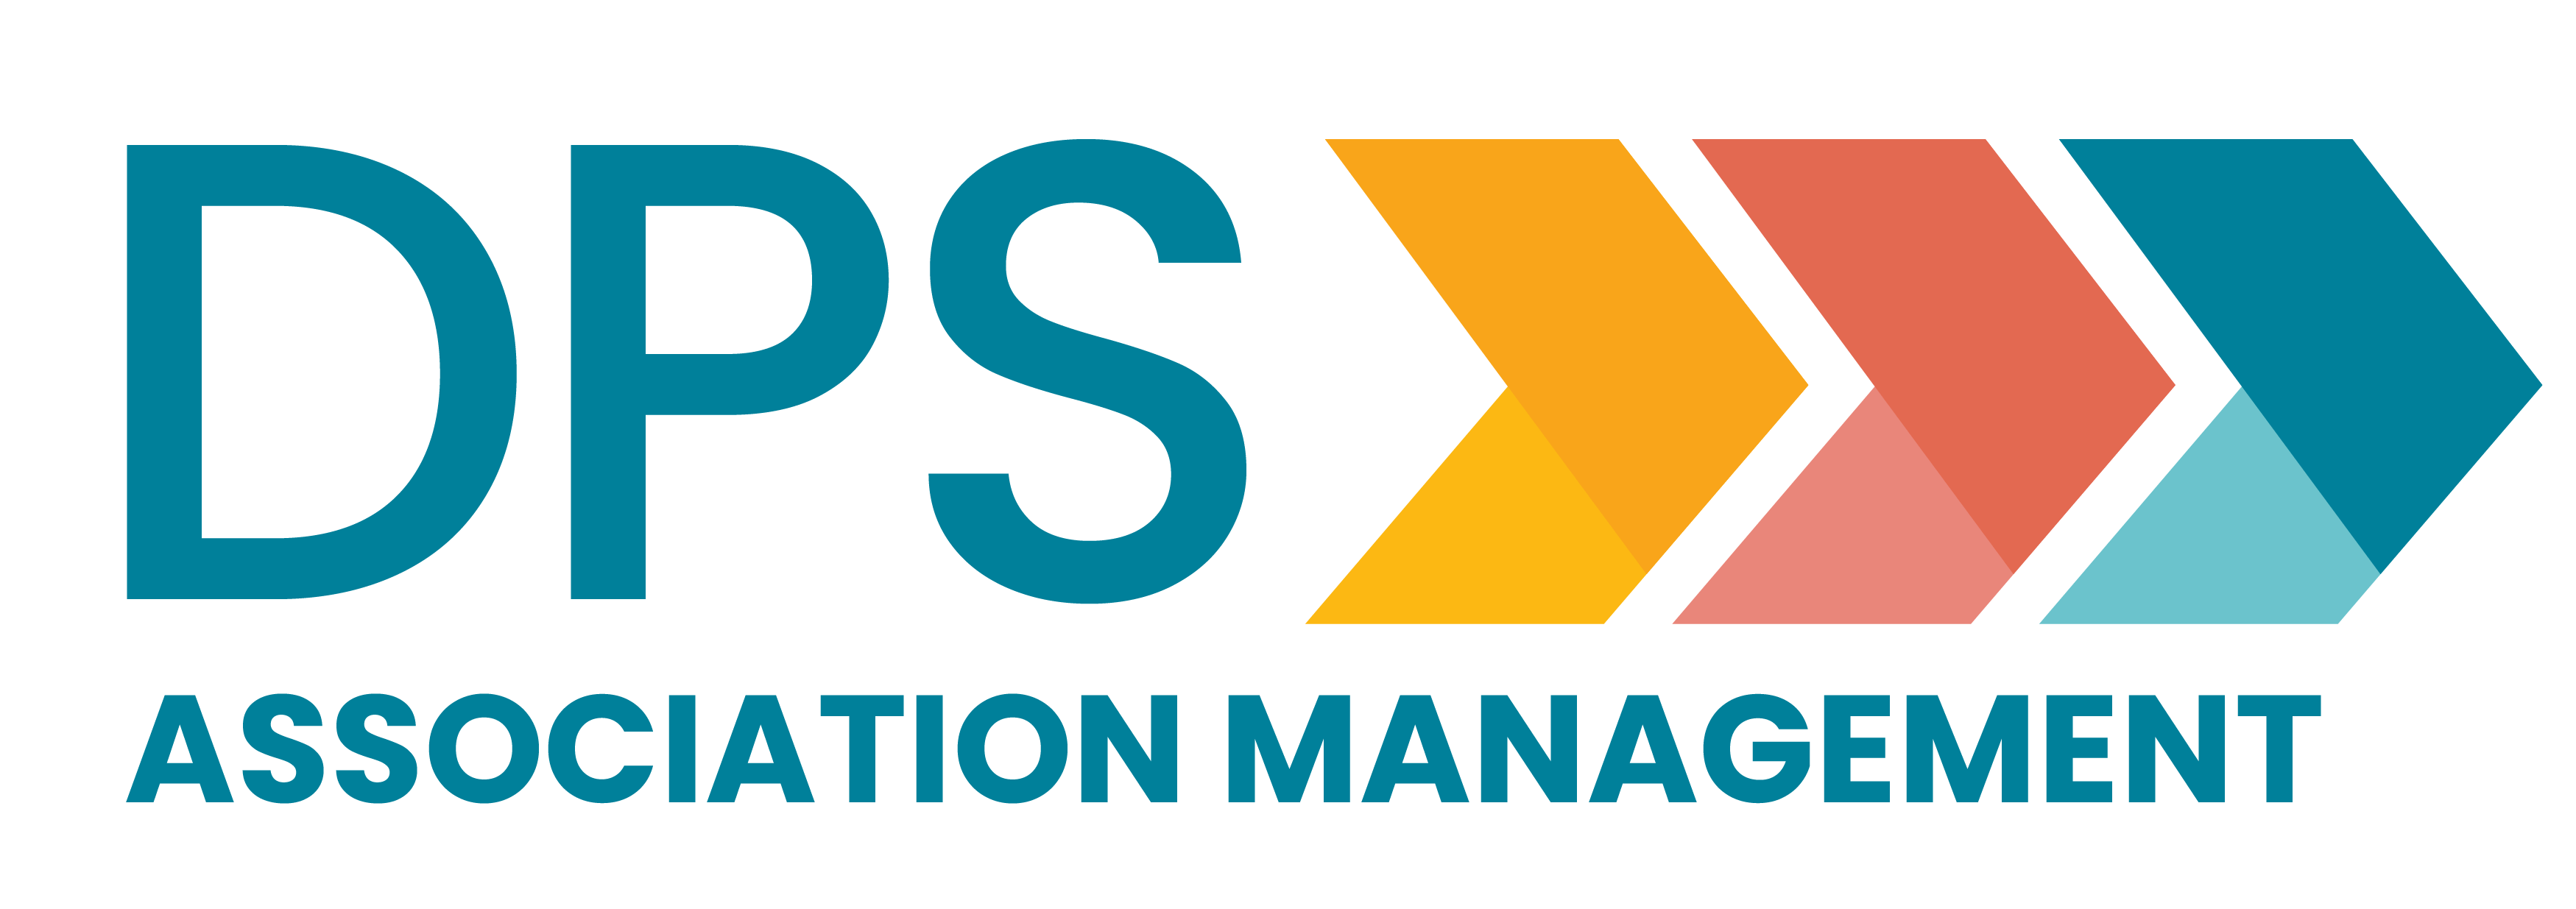 DPS Association Management